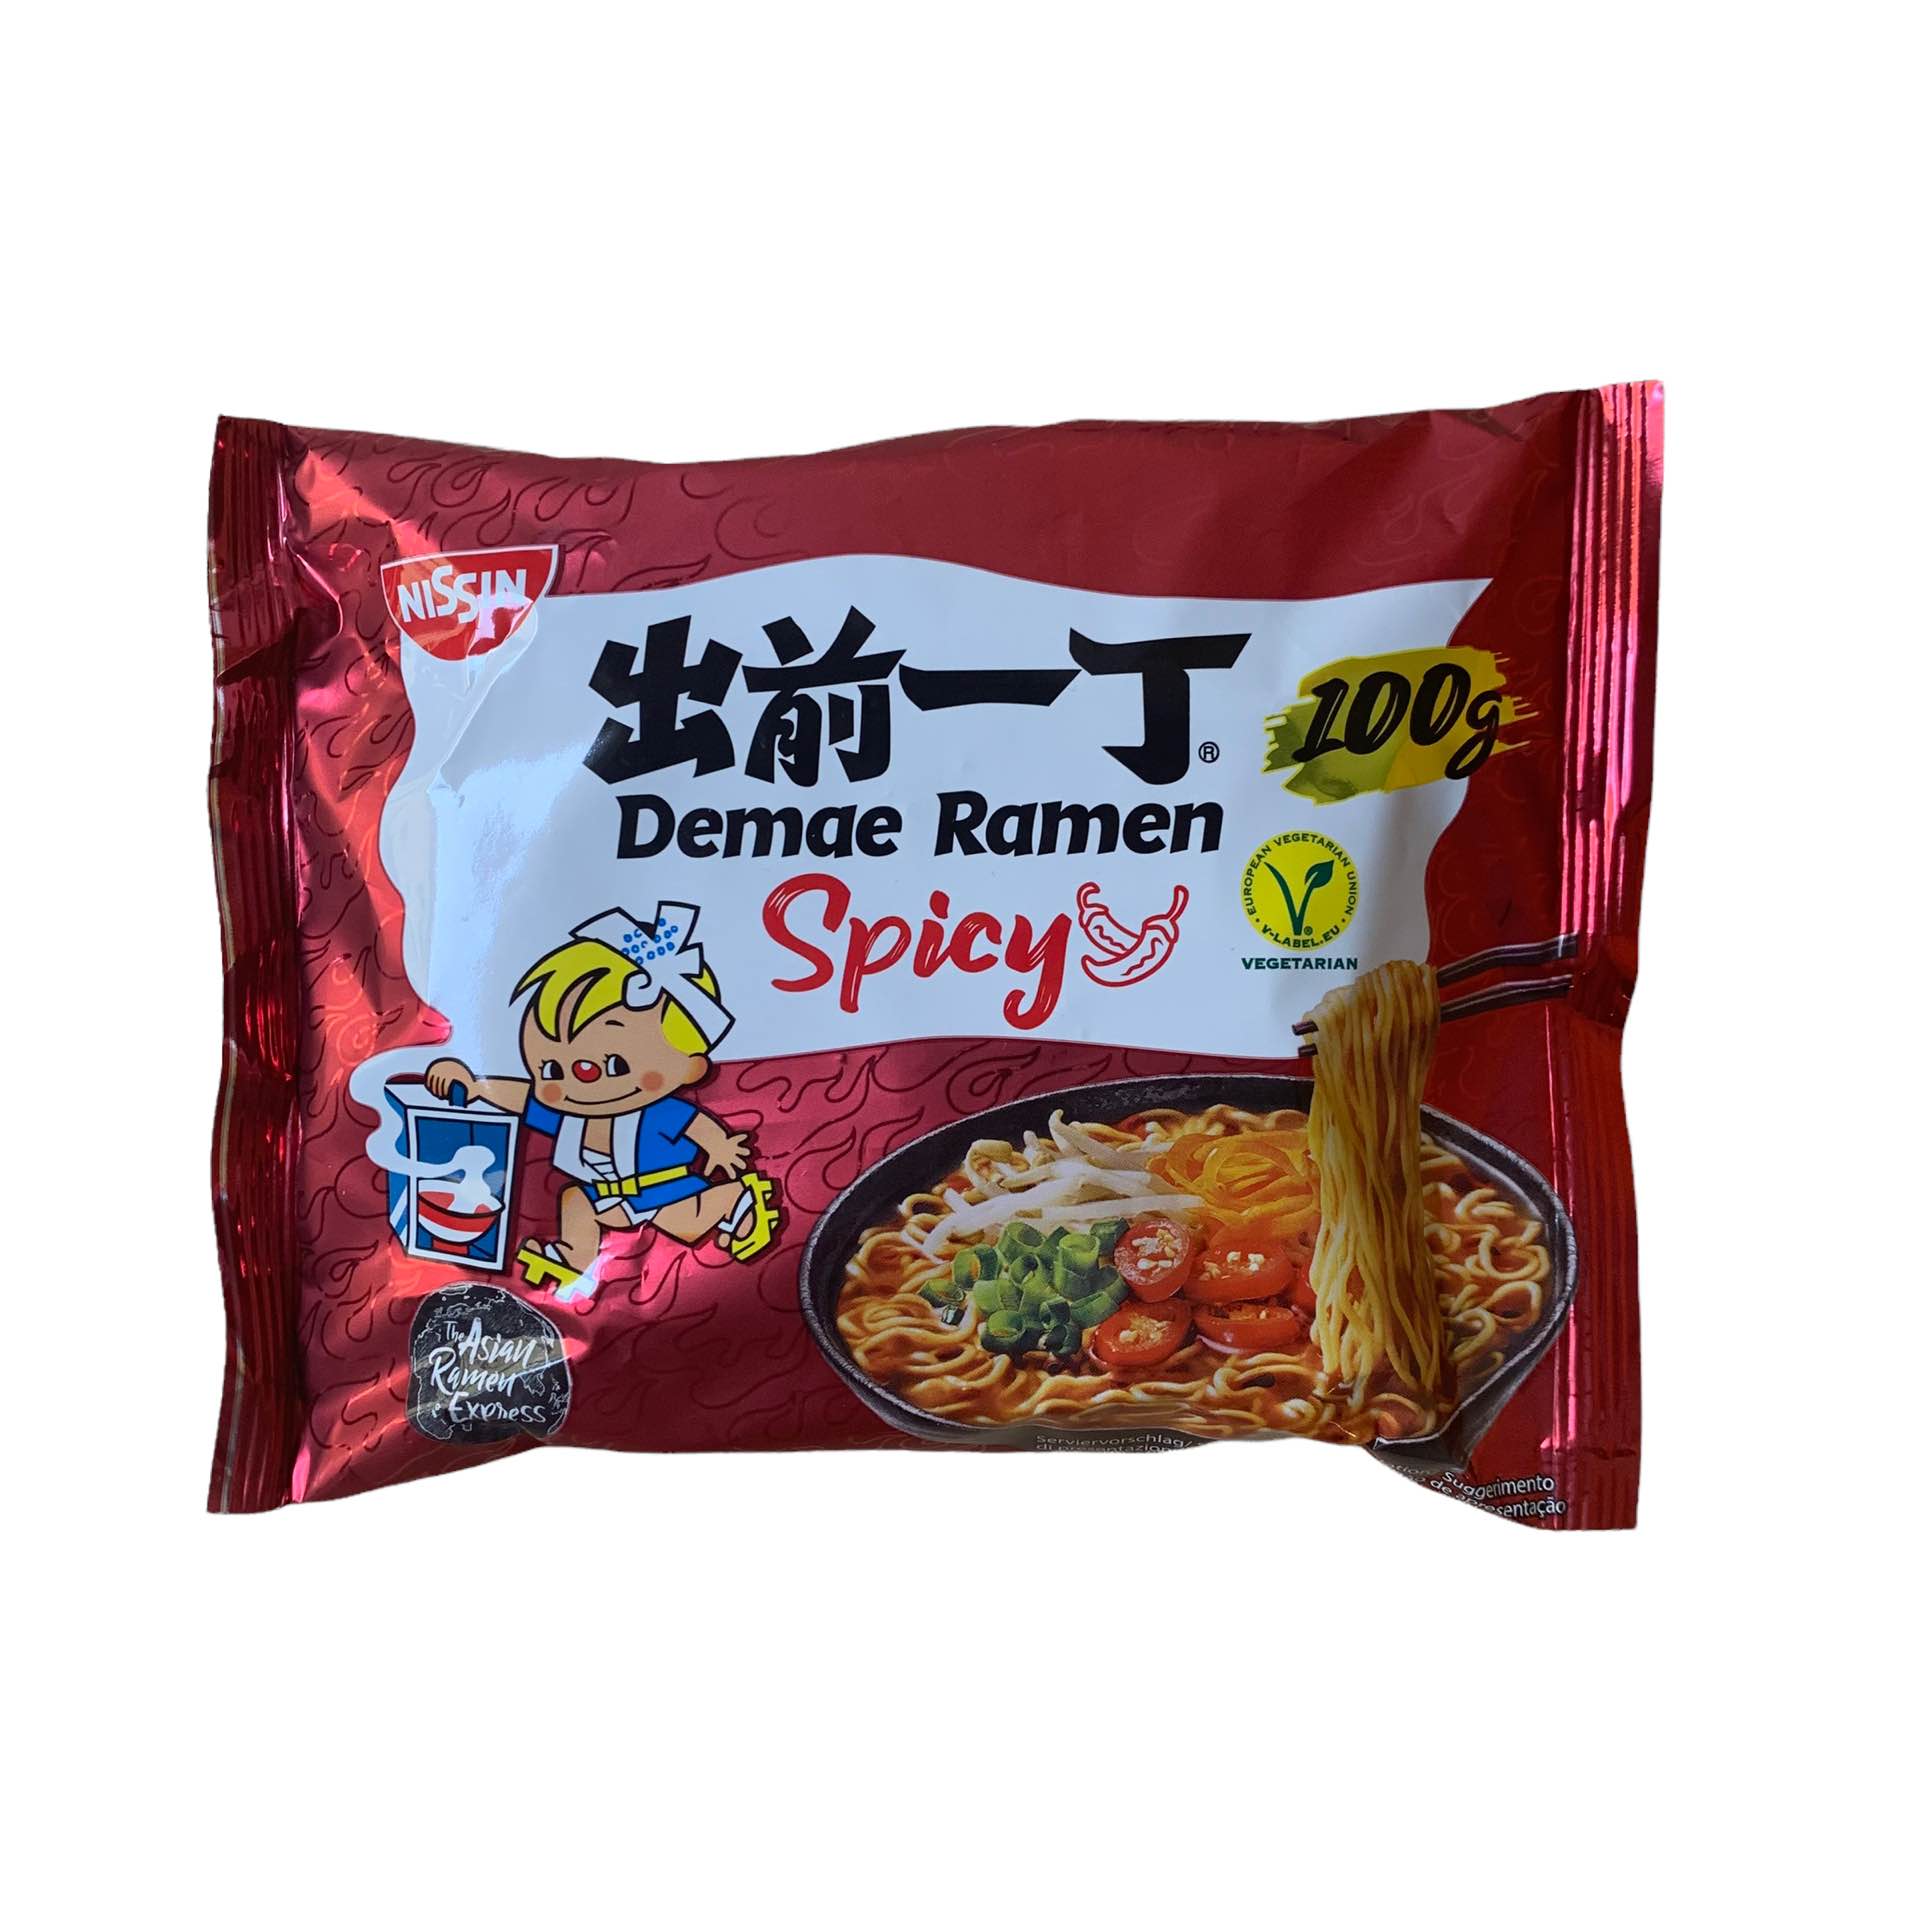 Demae Ramen Vegetarian Spicy Noodle Soup 100g - Nissin